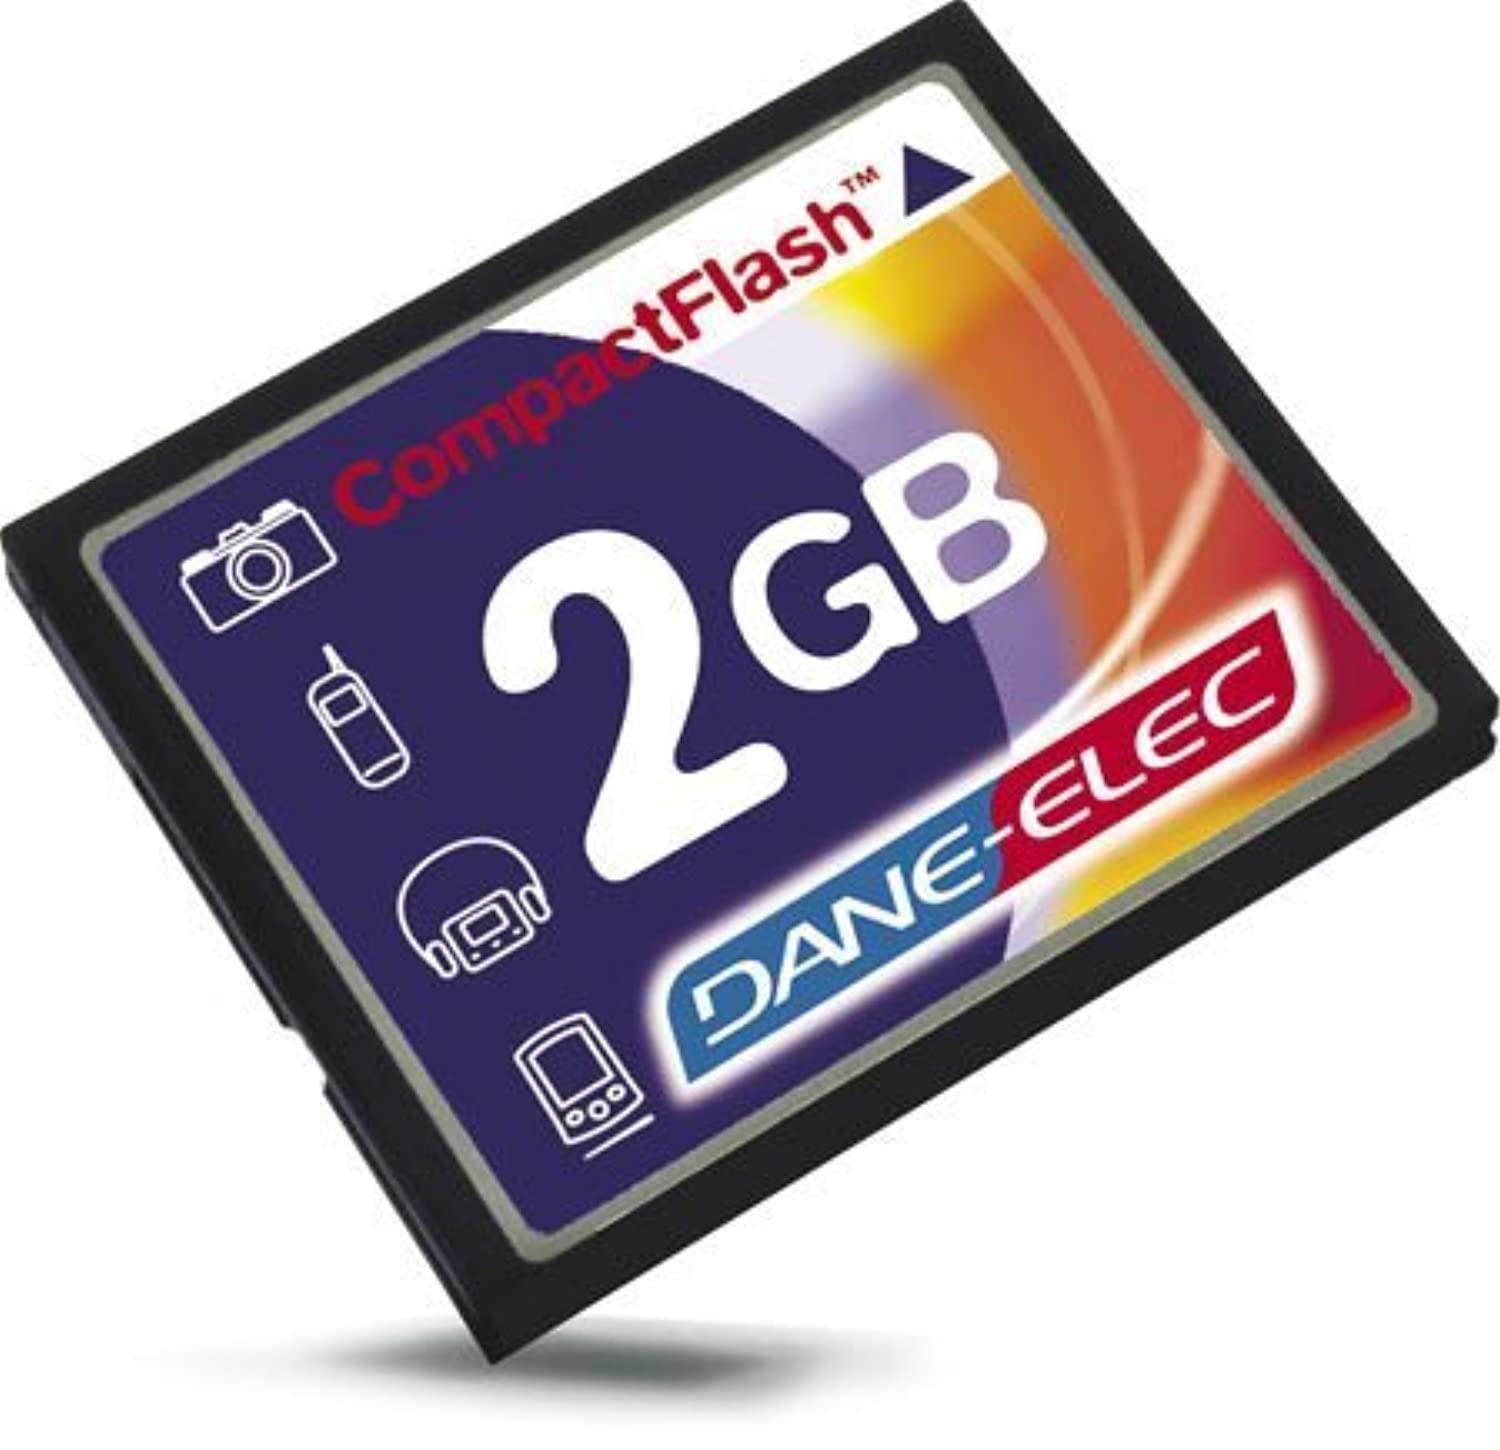 dane-elec 2gb compactflash memory card